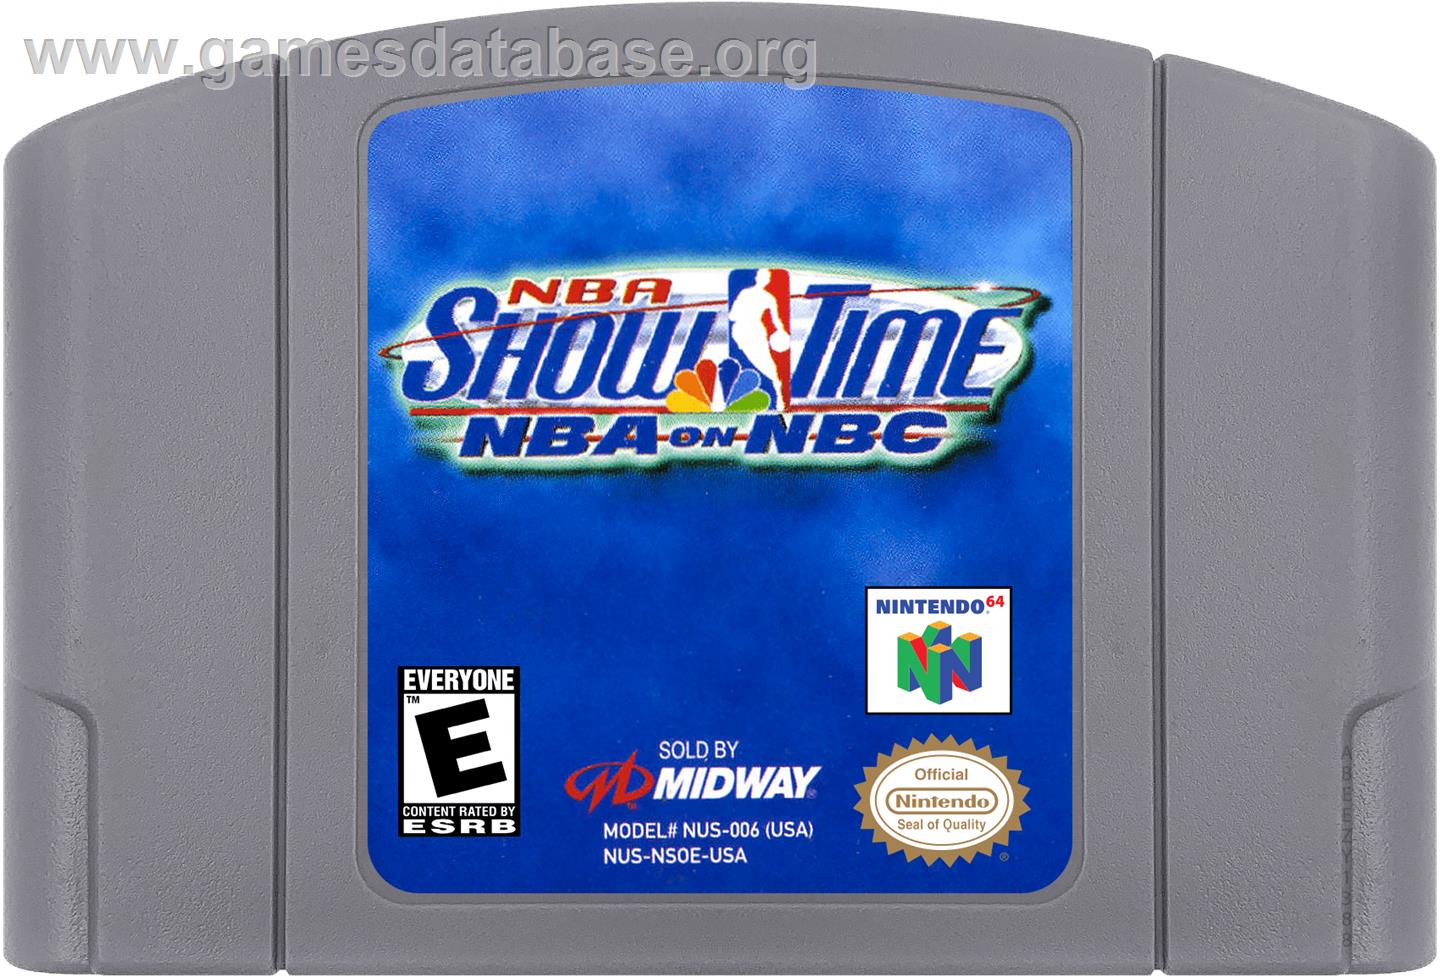 NBA Showtime: NBA on NBC - Nintendo N64 - Artwork - Cartridge